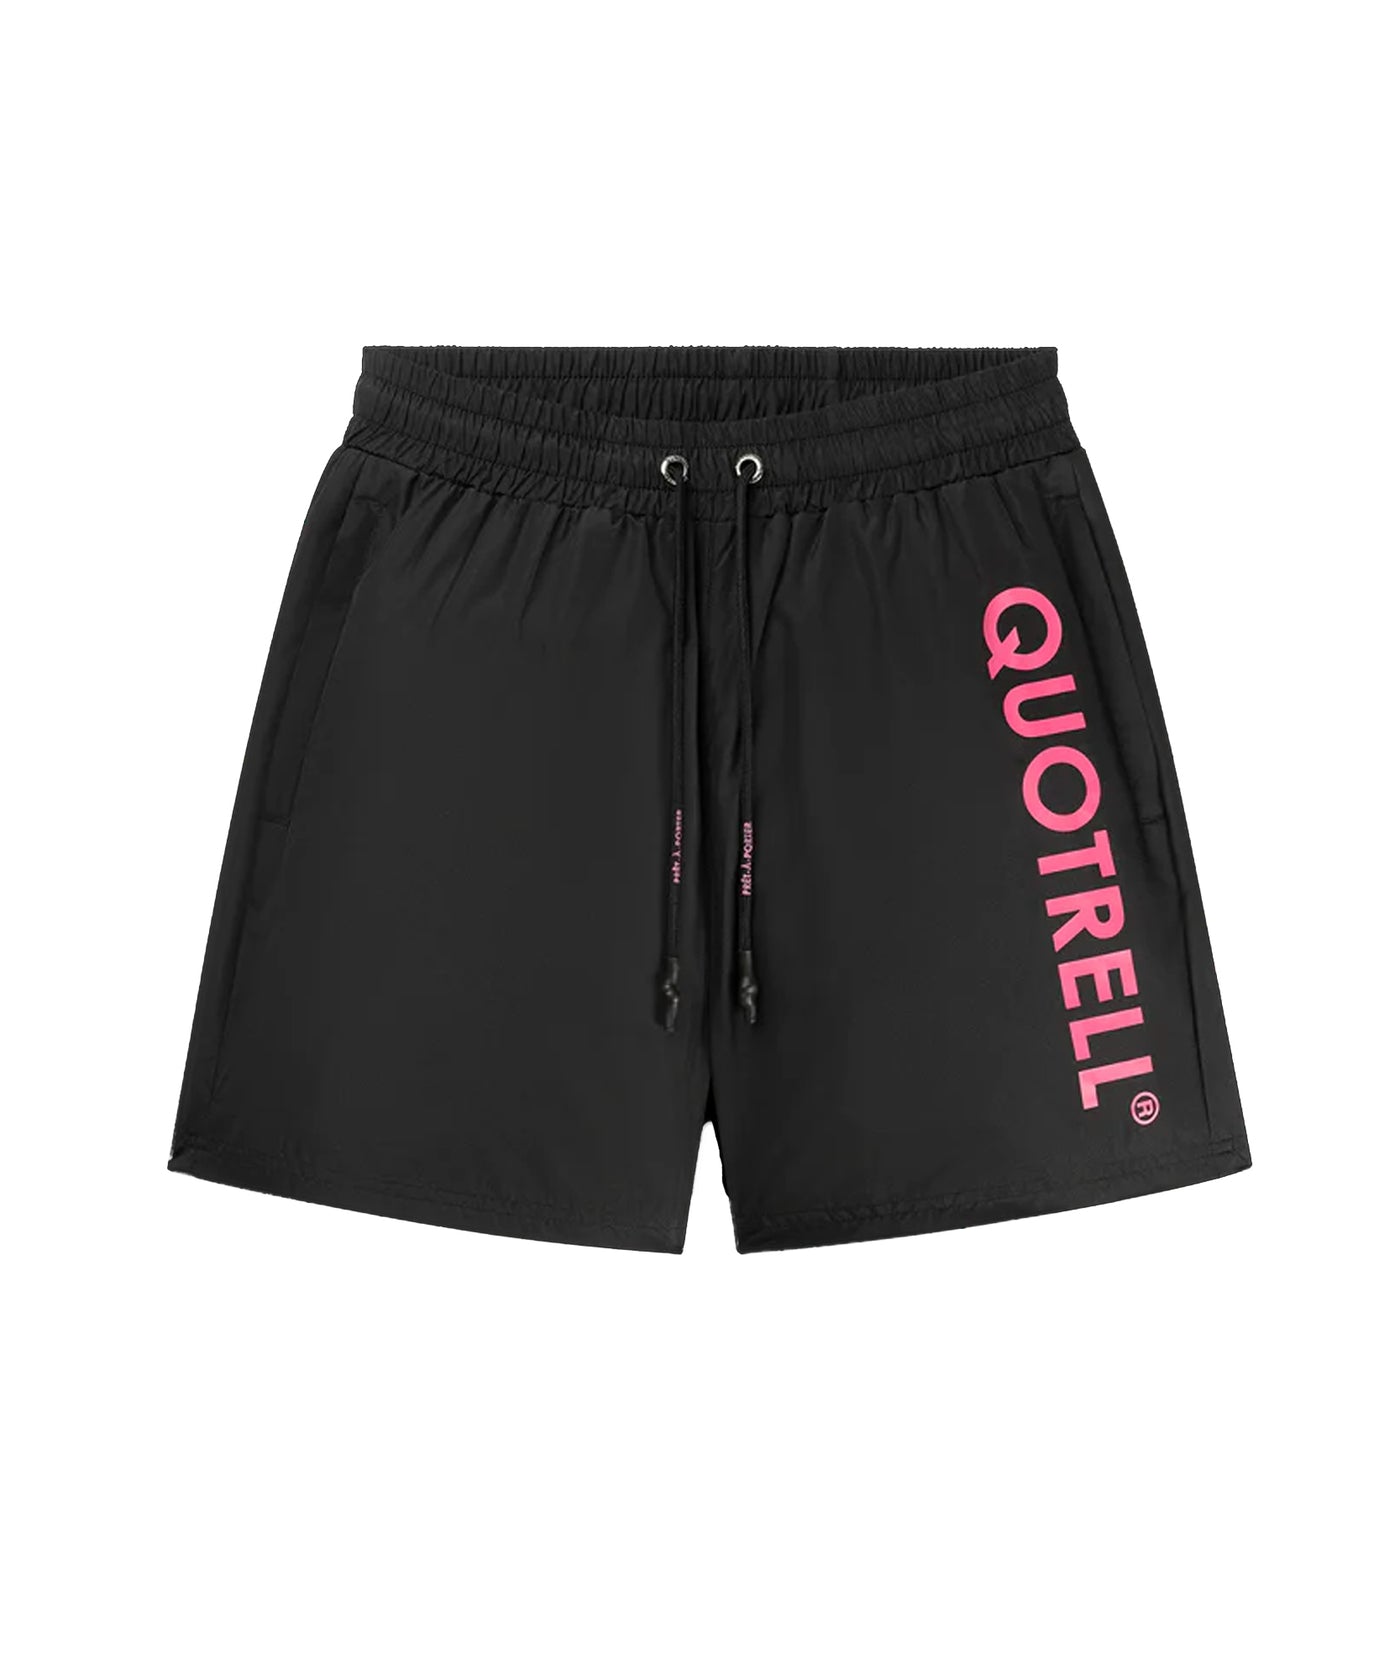 Quotrell - Maui - Swimshort - Black/ Neon Pink